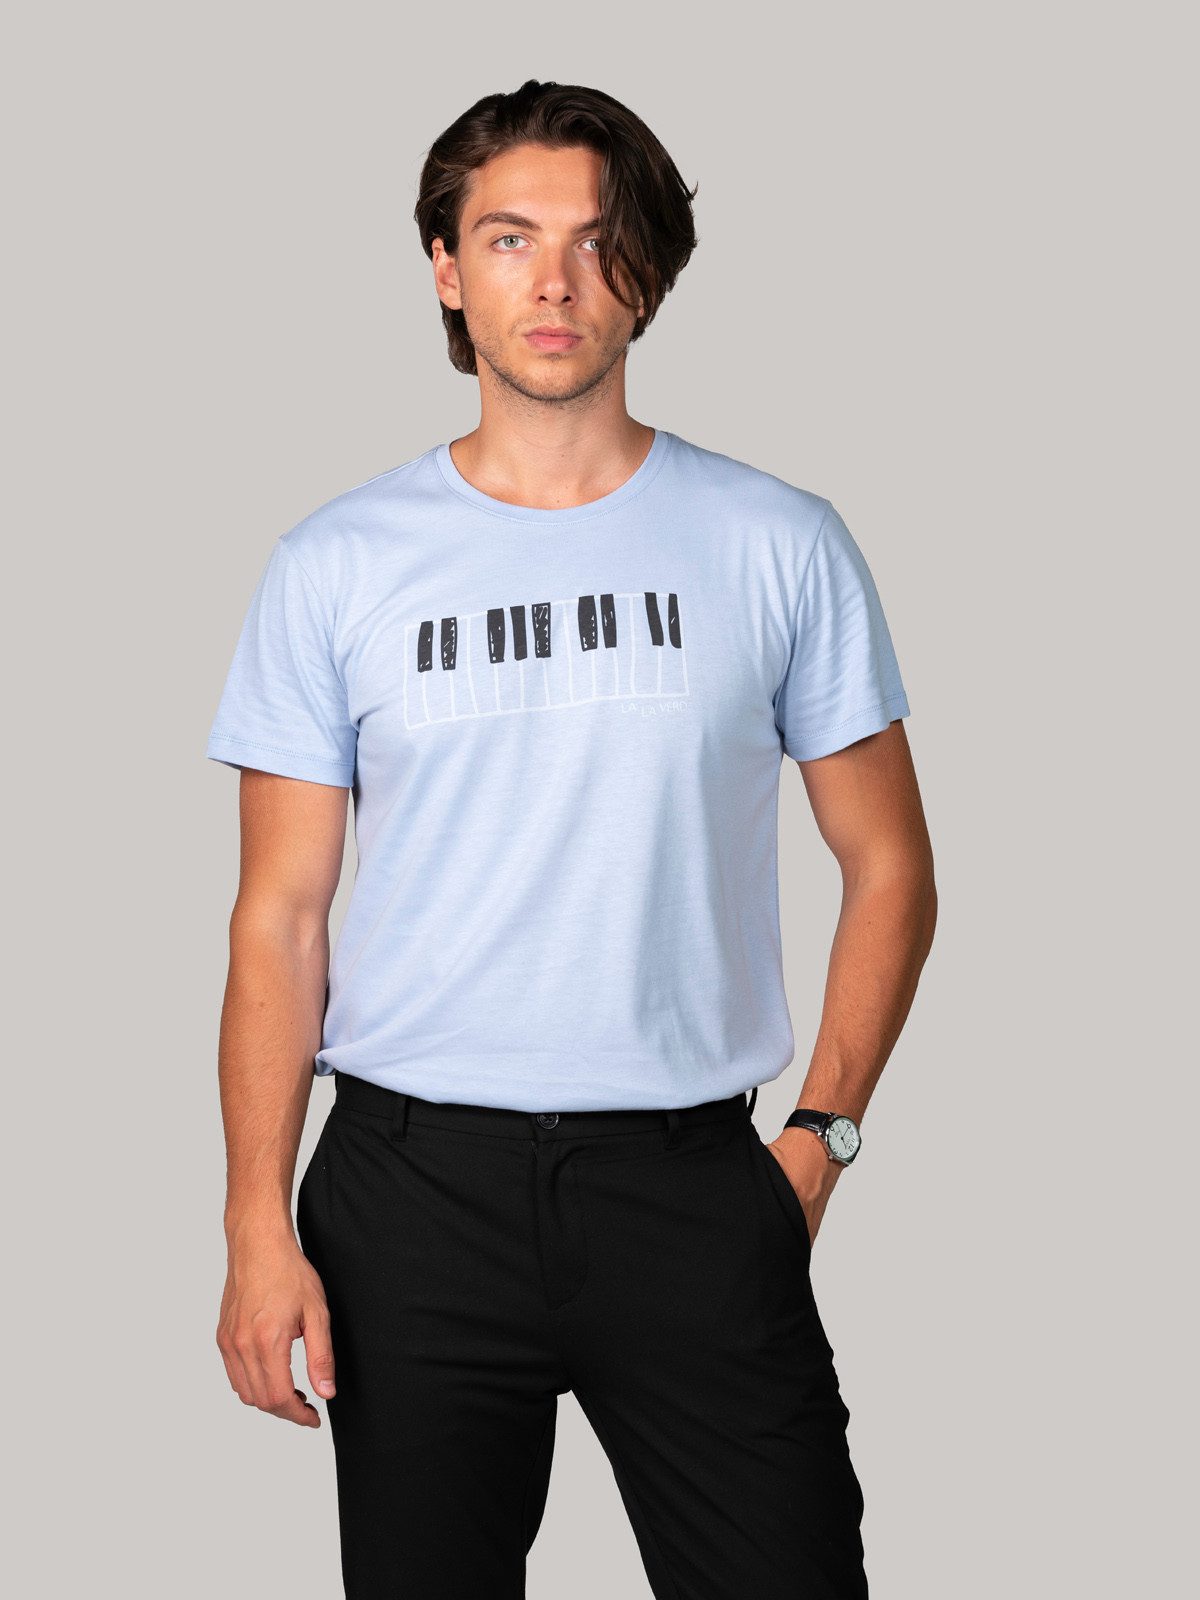 BLUVERD Kurzarmshirt T-Shirt mit Grafik (La La Verd)